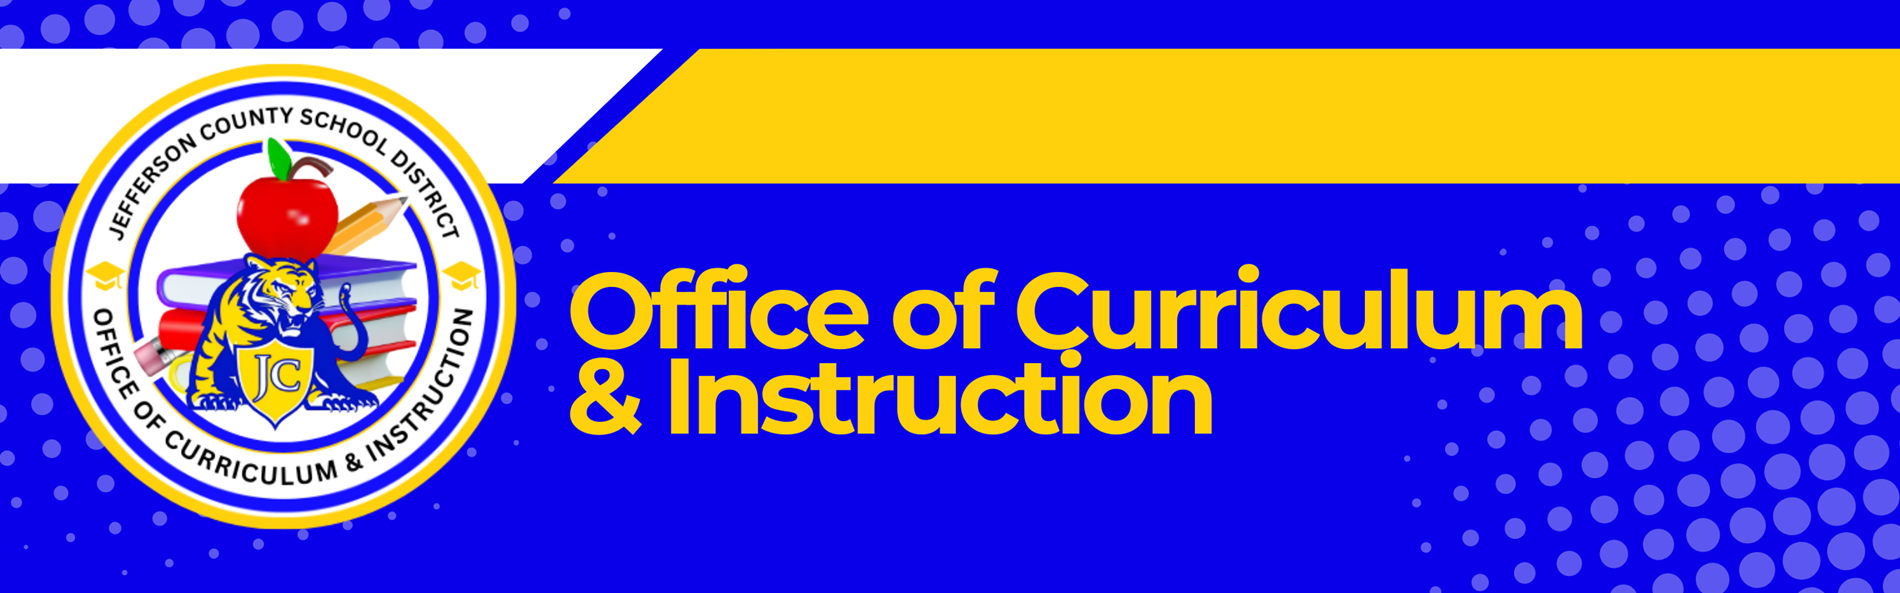 Curriculum Banner